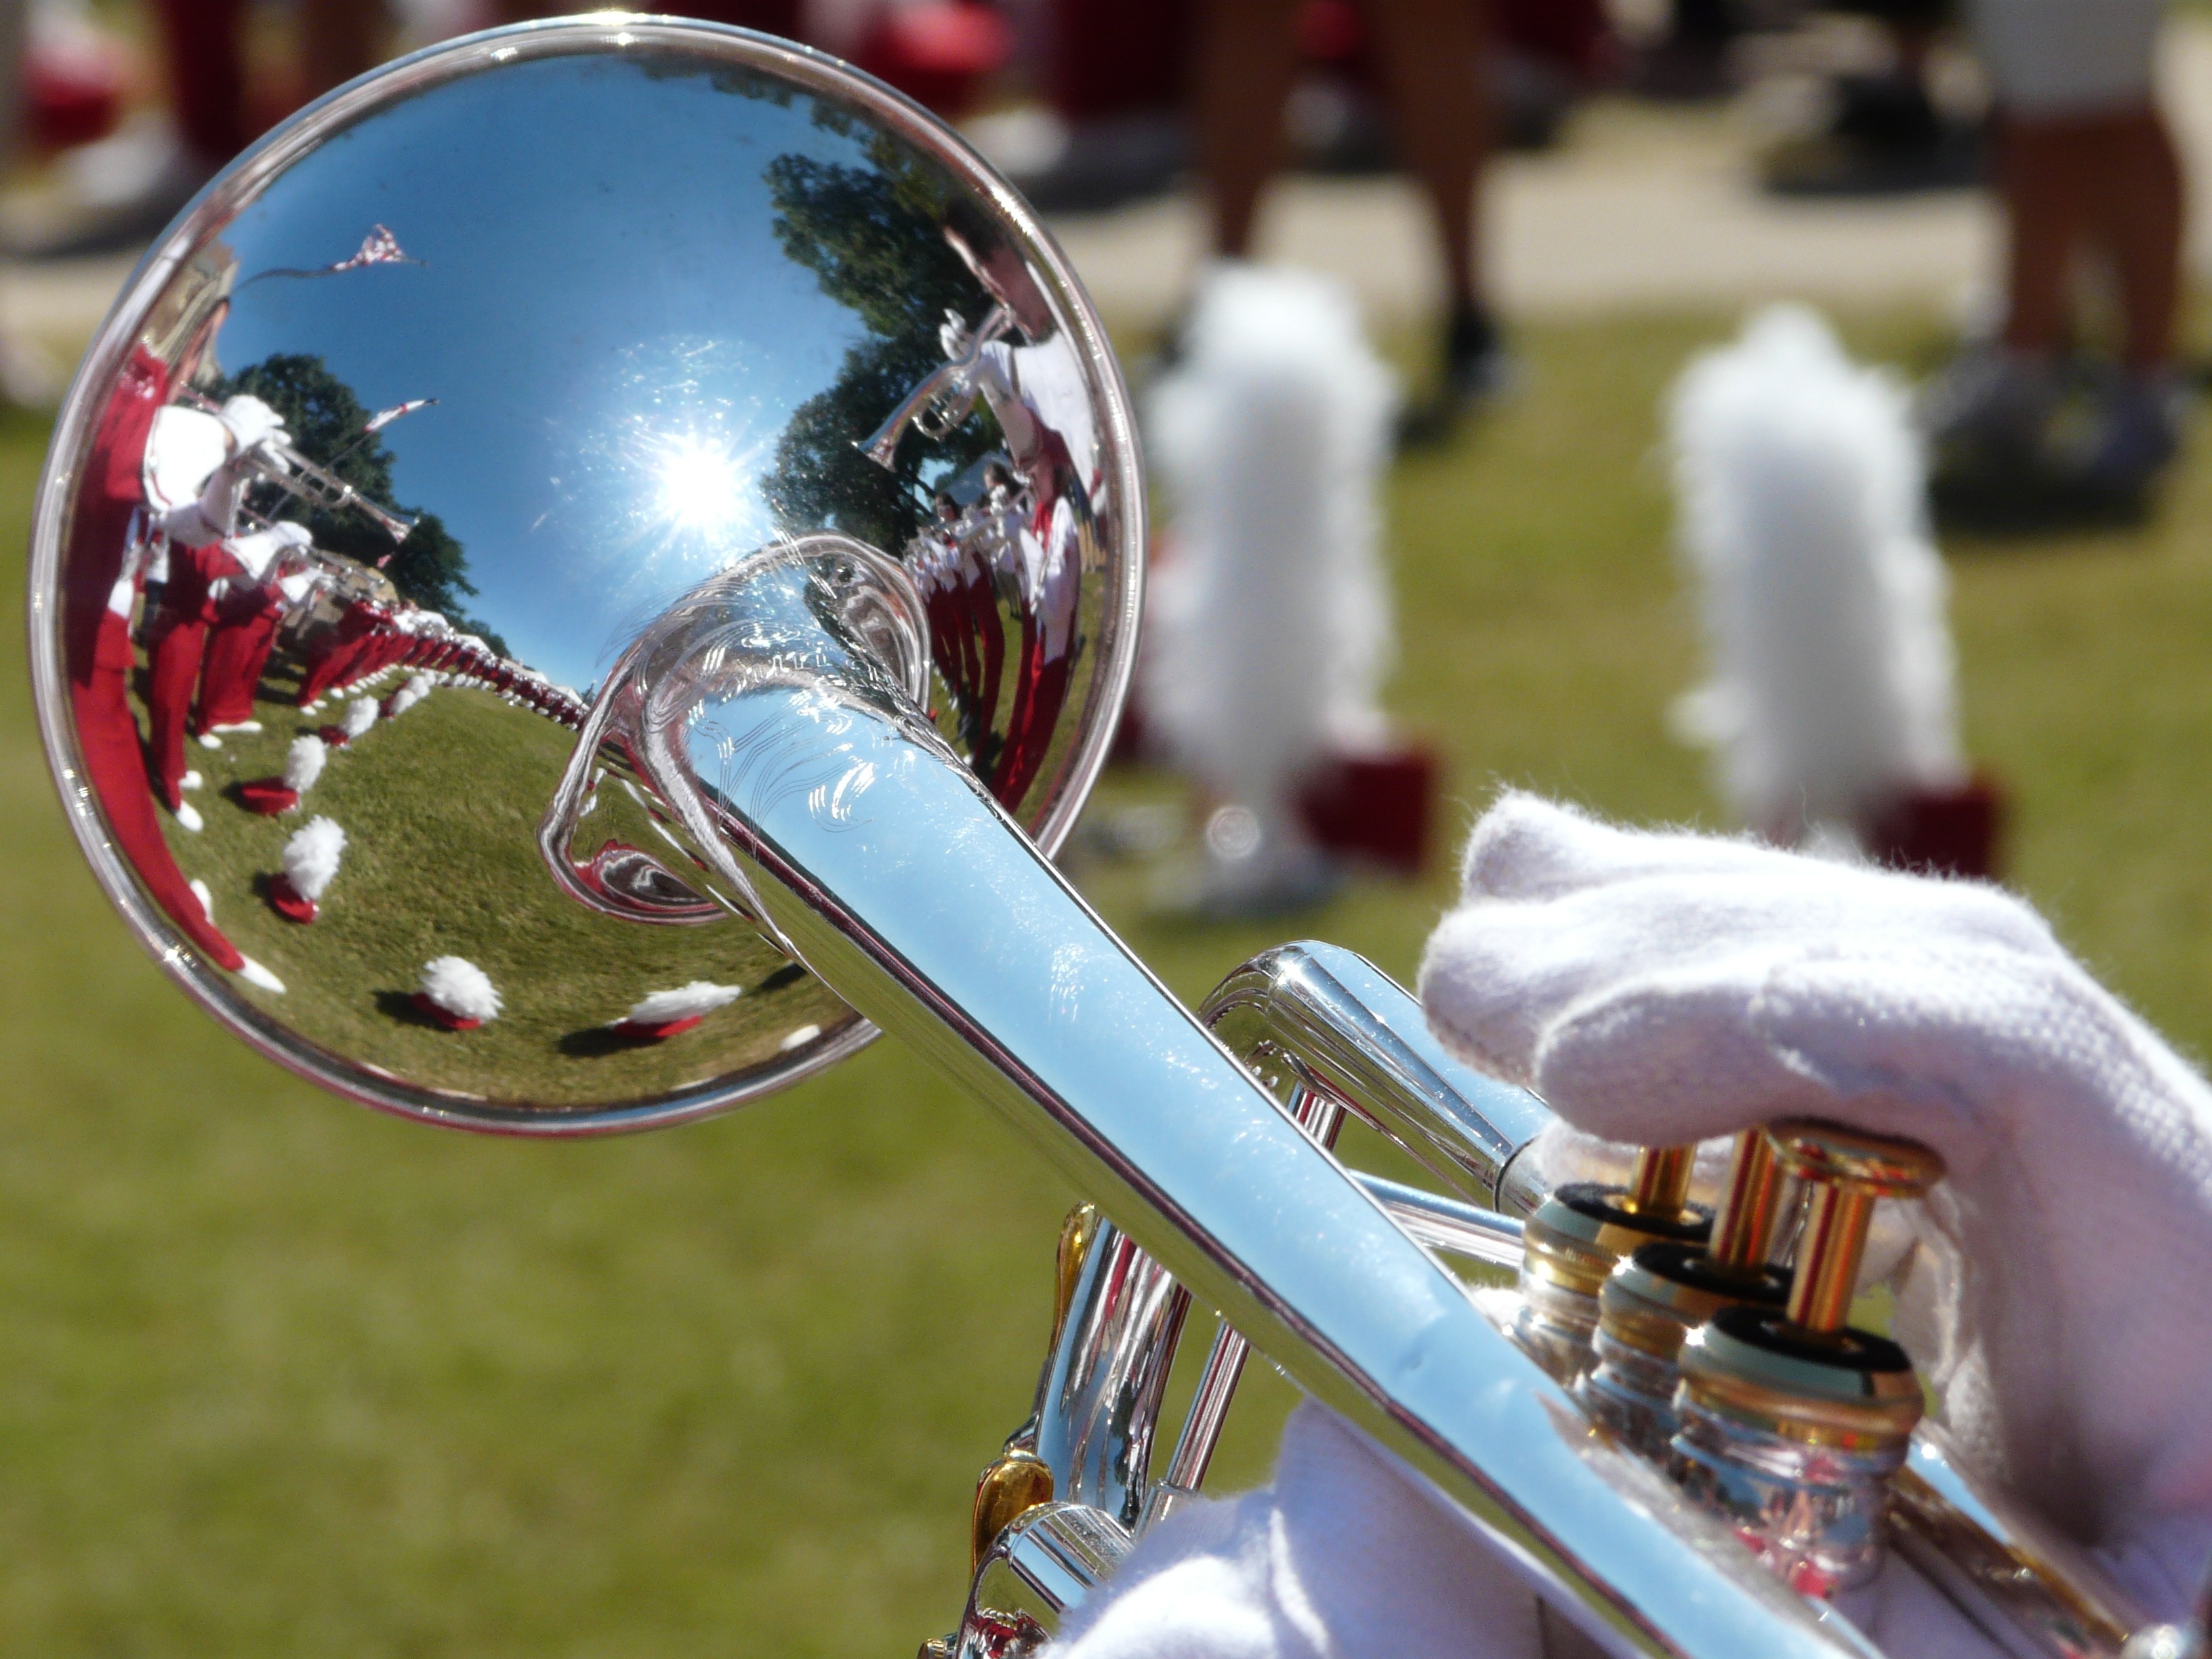 Trumpet, Band, Uniforms, Performance, reflection, shiny